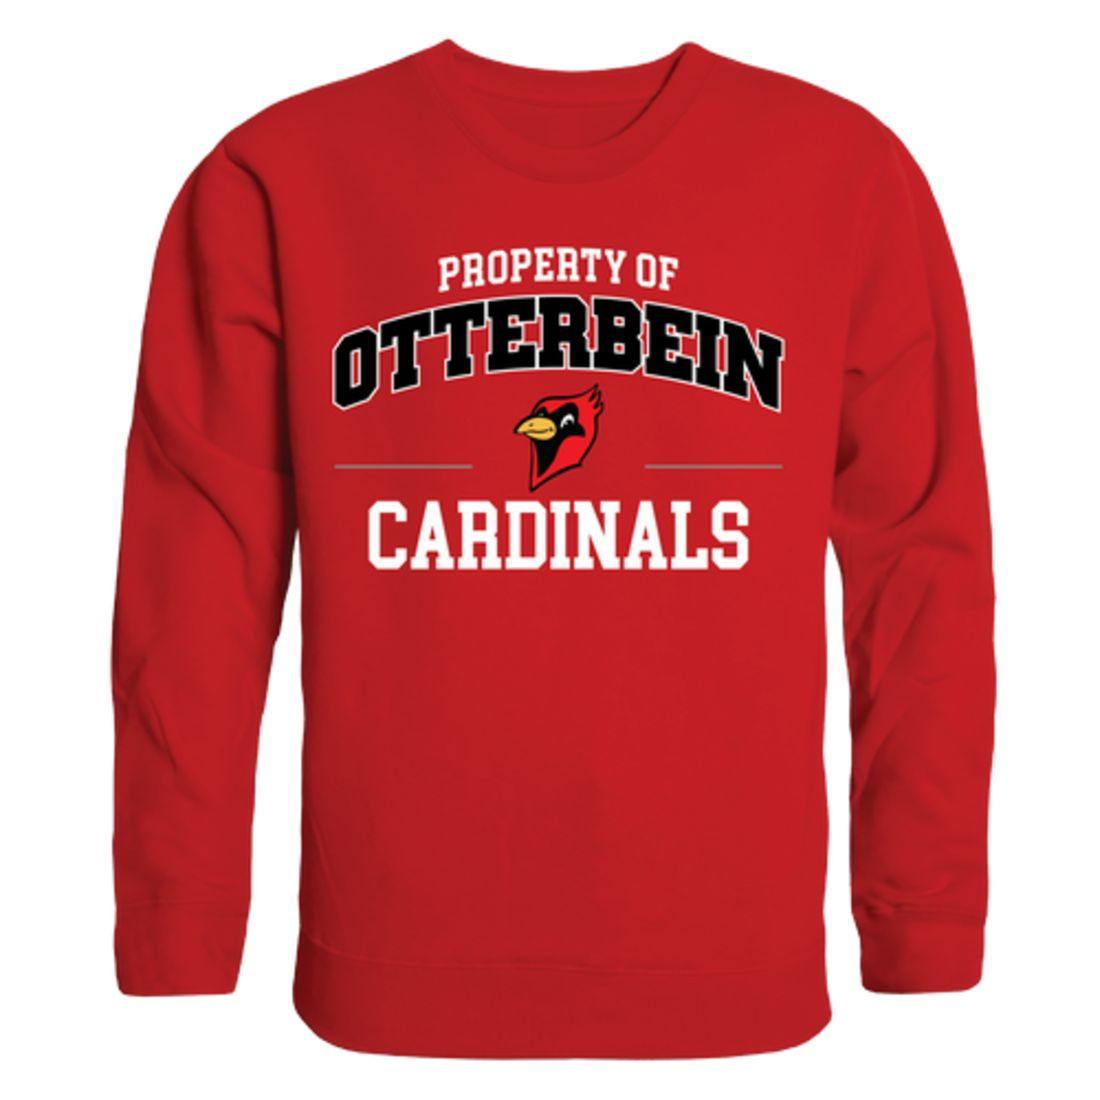 Otterbein University Property Crewneck Pullover Sweatshirt Sweater Red-Campus-Wardrobe